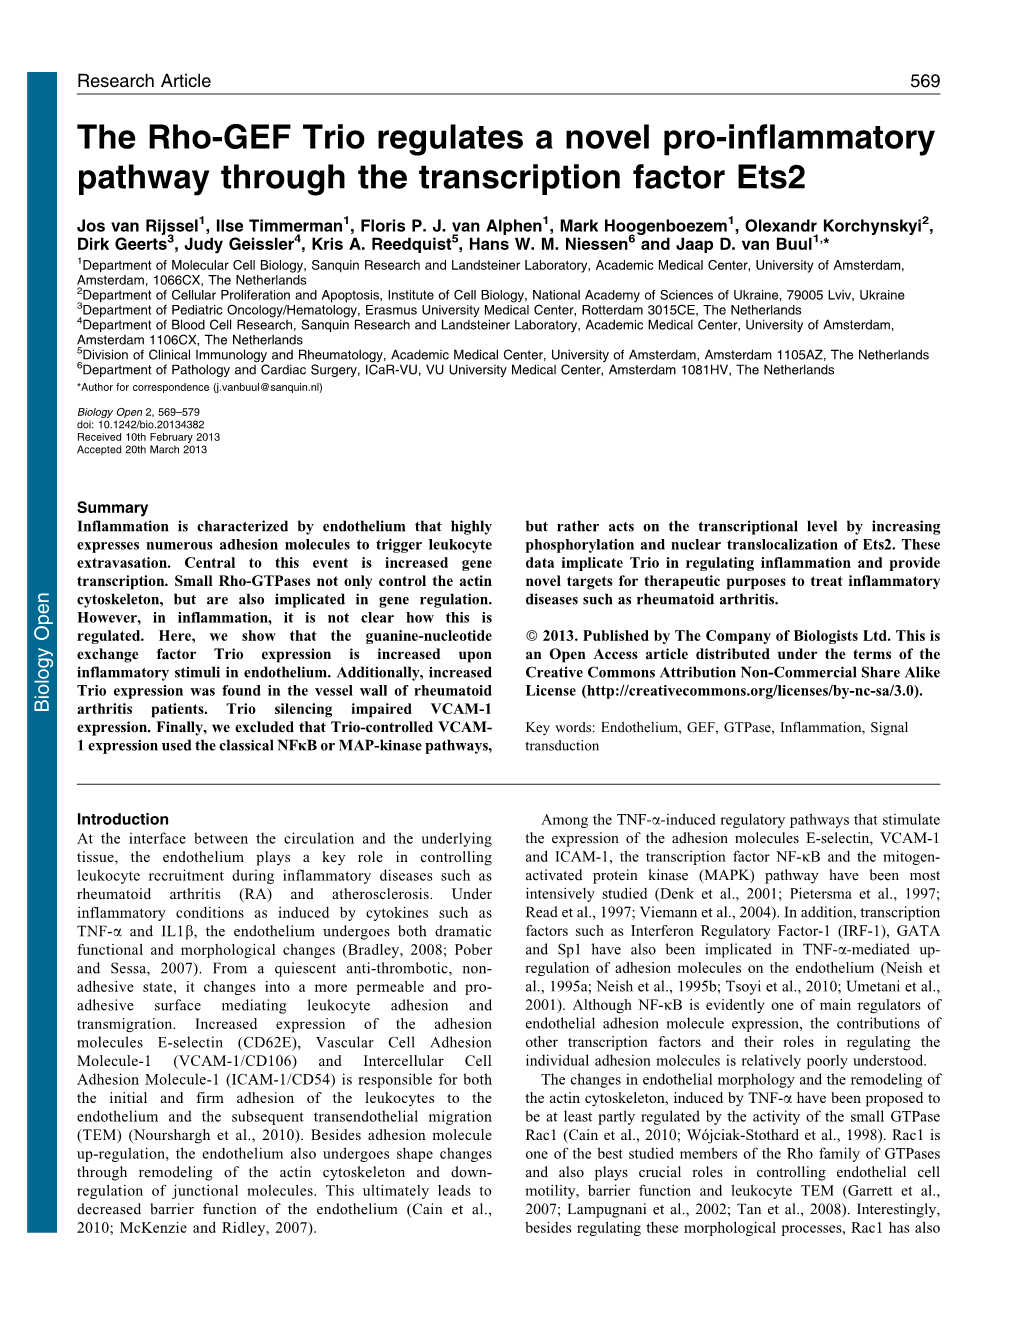 The Rho-GEF Trio Regulates a Novel Pro-Inflammatory Pathway Through the Transcription Factor Ets2